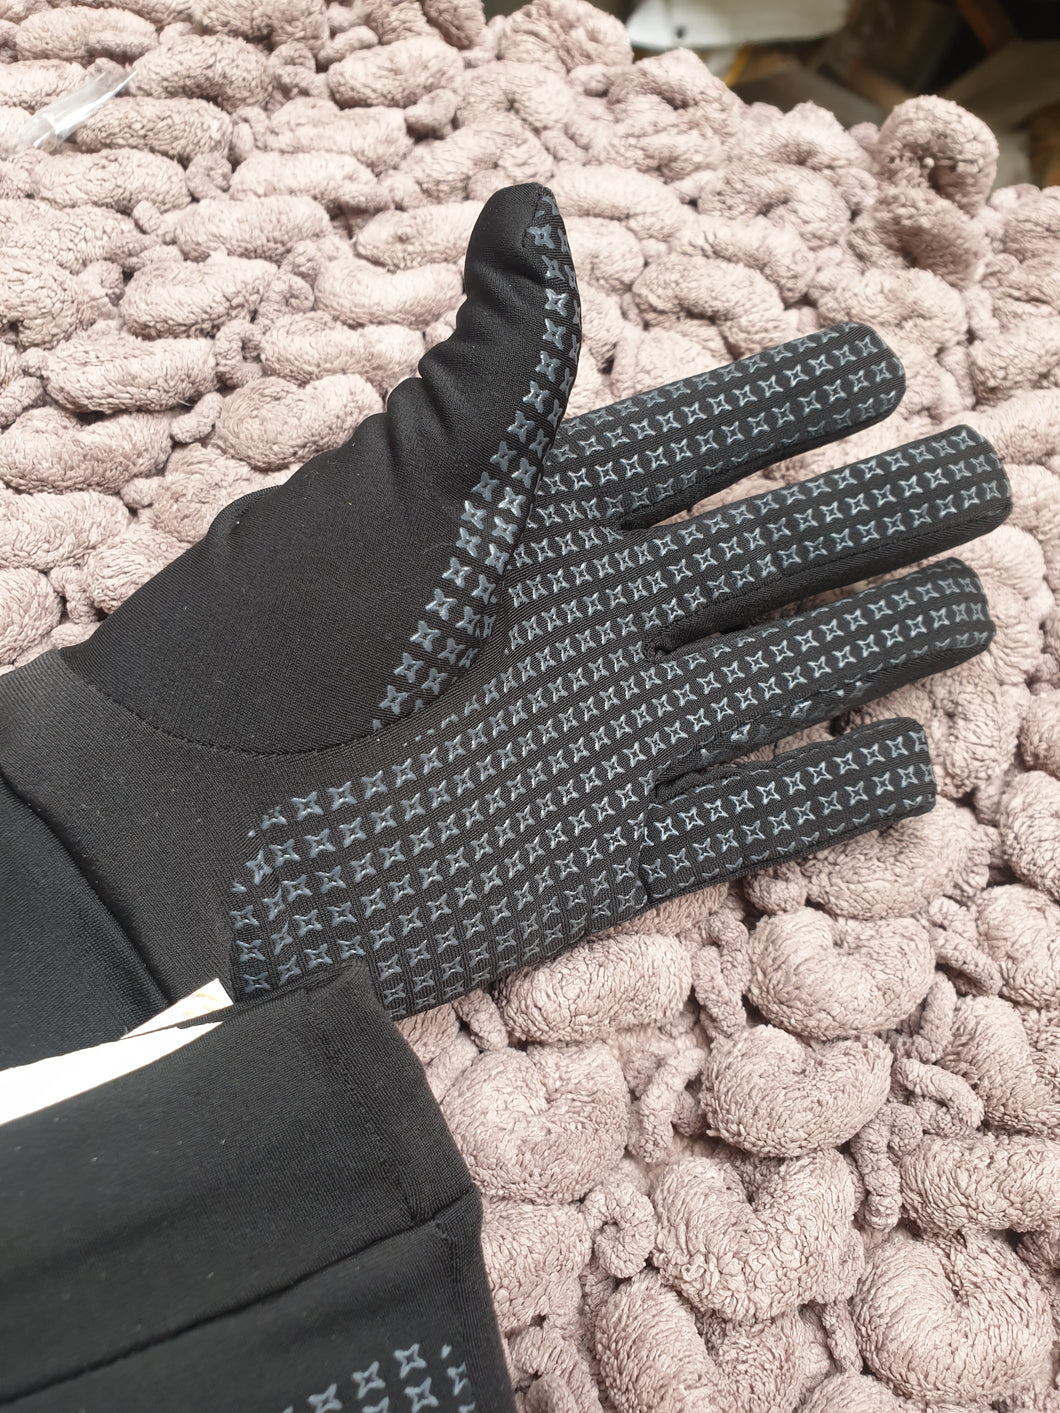 New Rhinegold soft grip palm lycra riding gloves FREE POSTAGE☆